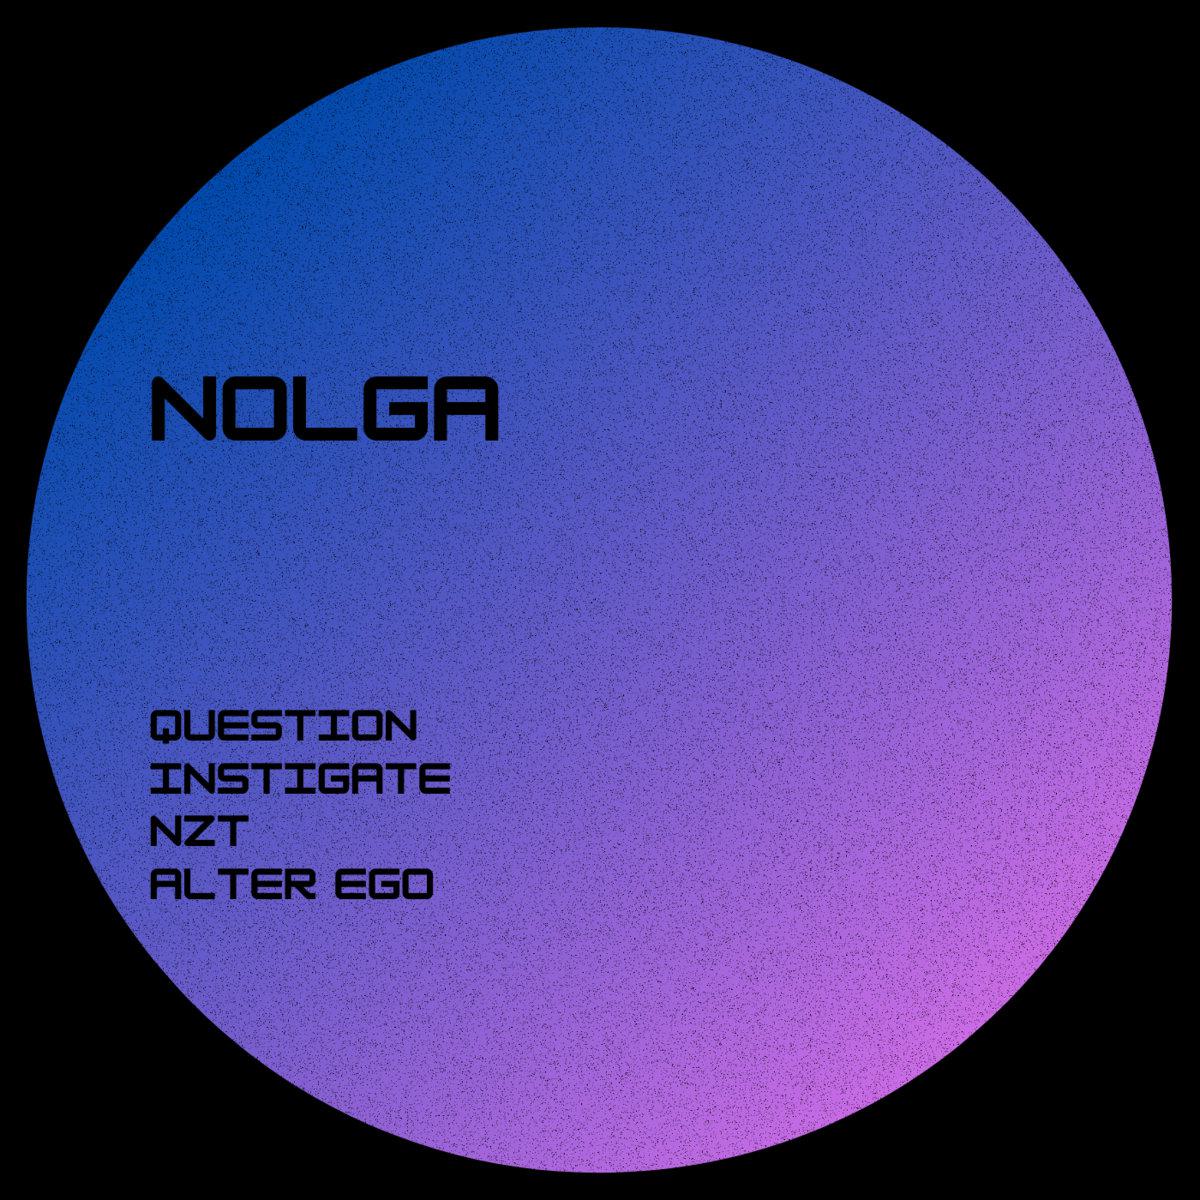 image cover: Nolga - Alter Ego EP on No label (Nolga self-released)